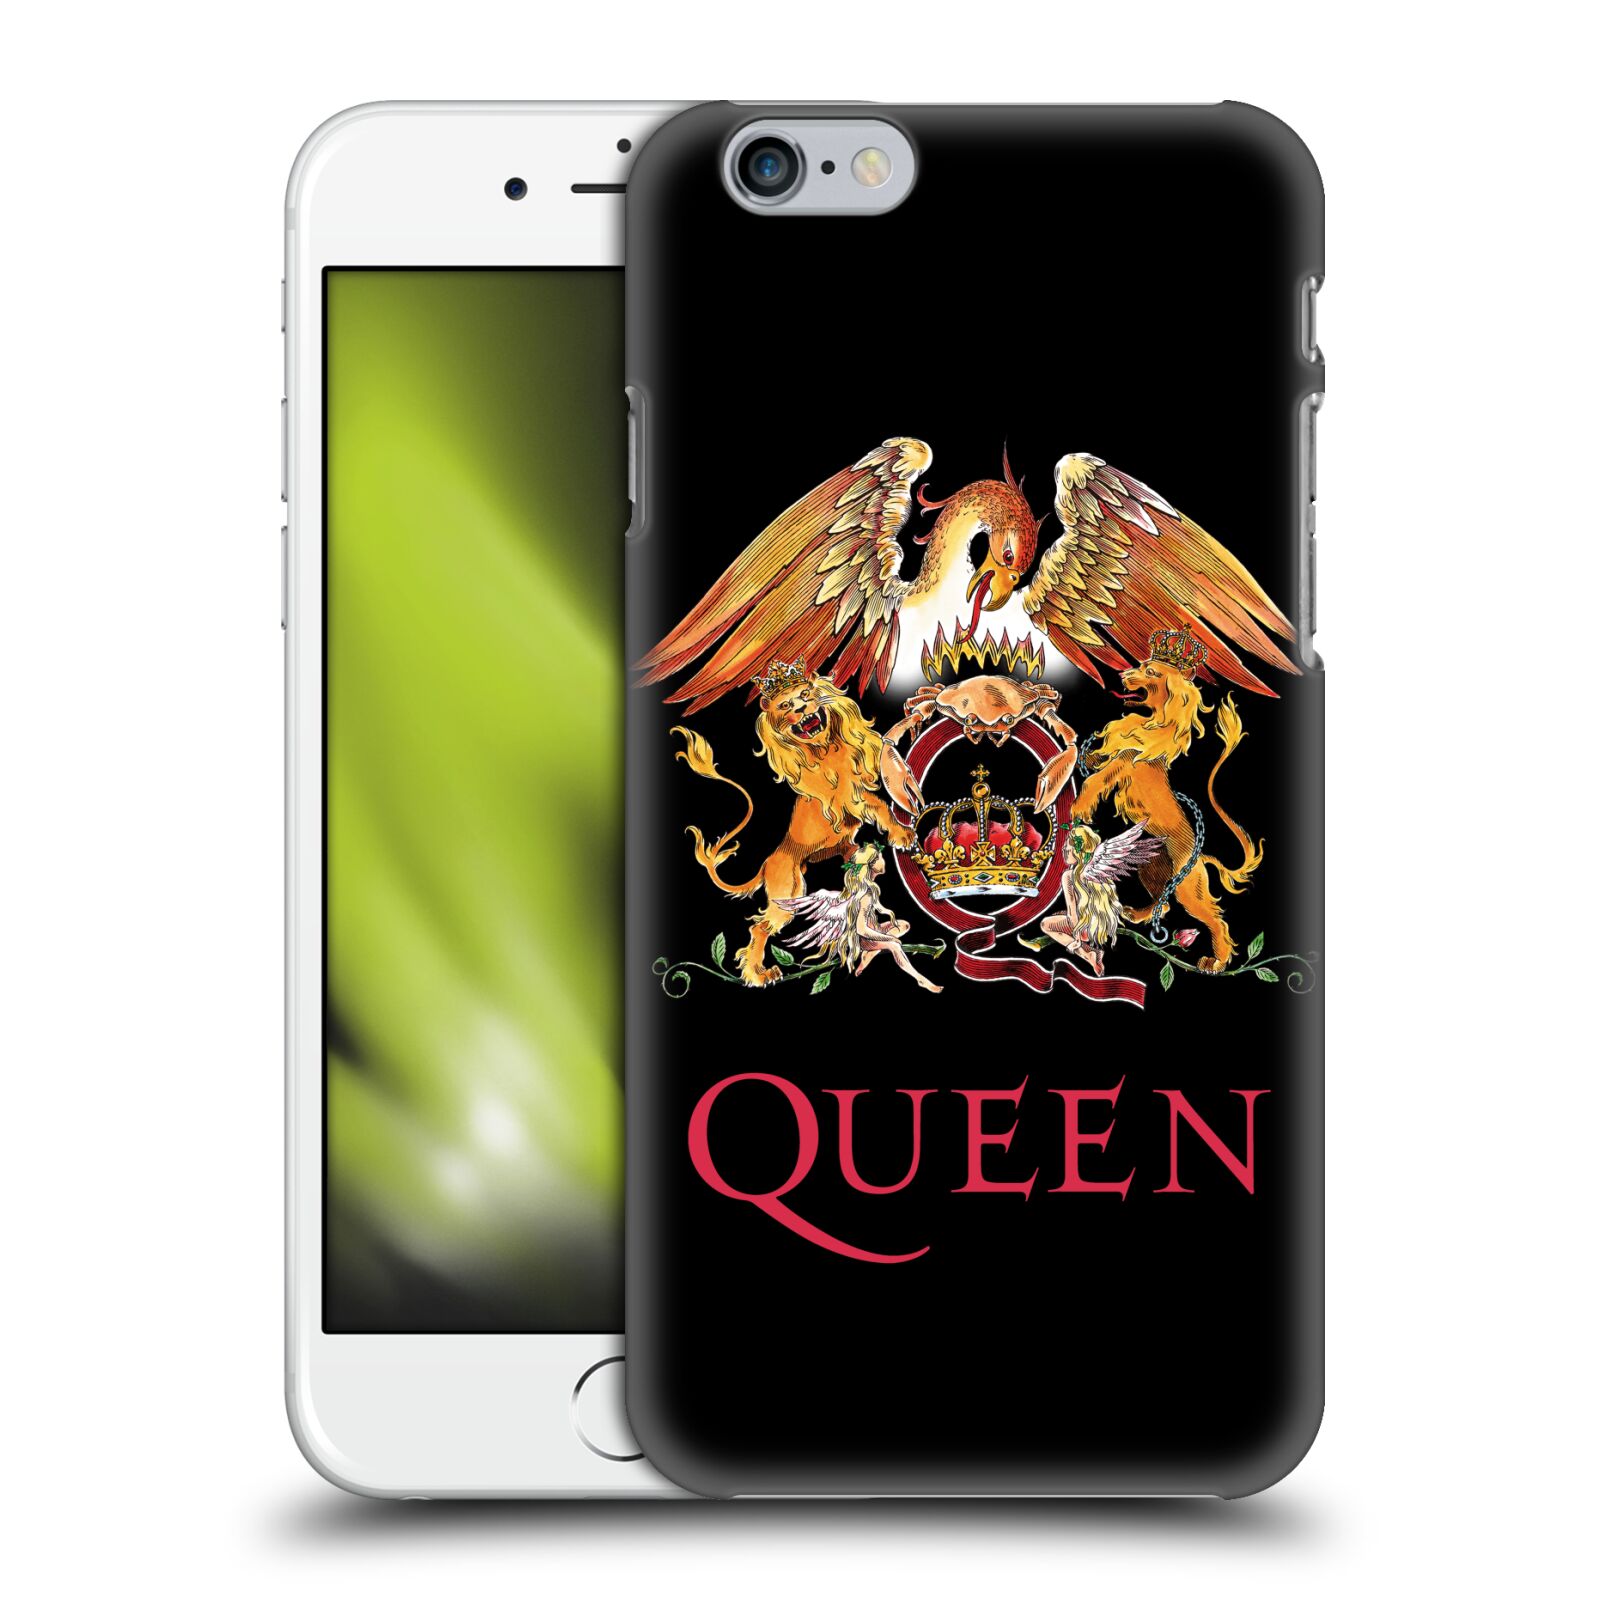 Plastové pouzdro na mobil Apple iPhone 6 HEAD CASE Queen - Logo (Plastový kryt či obal na mobilní telefon licencovaným motivem Queen pro Apple iPhone 6)